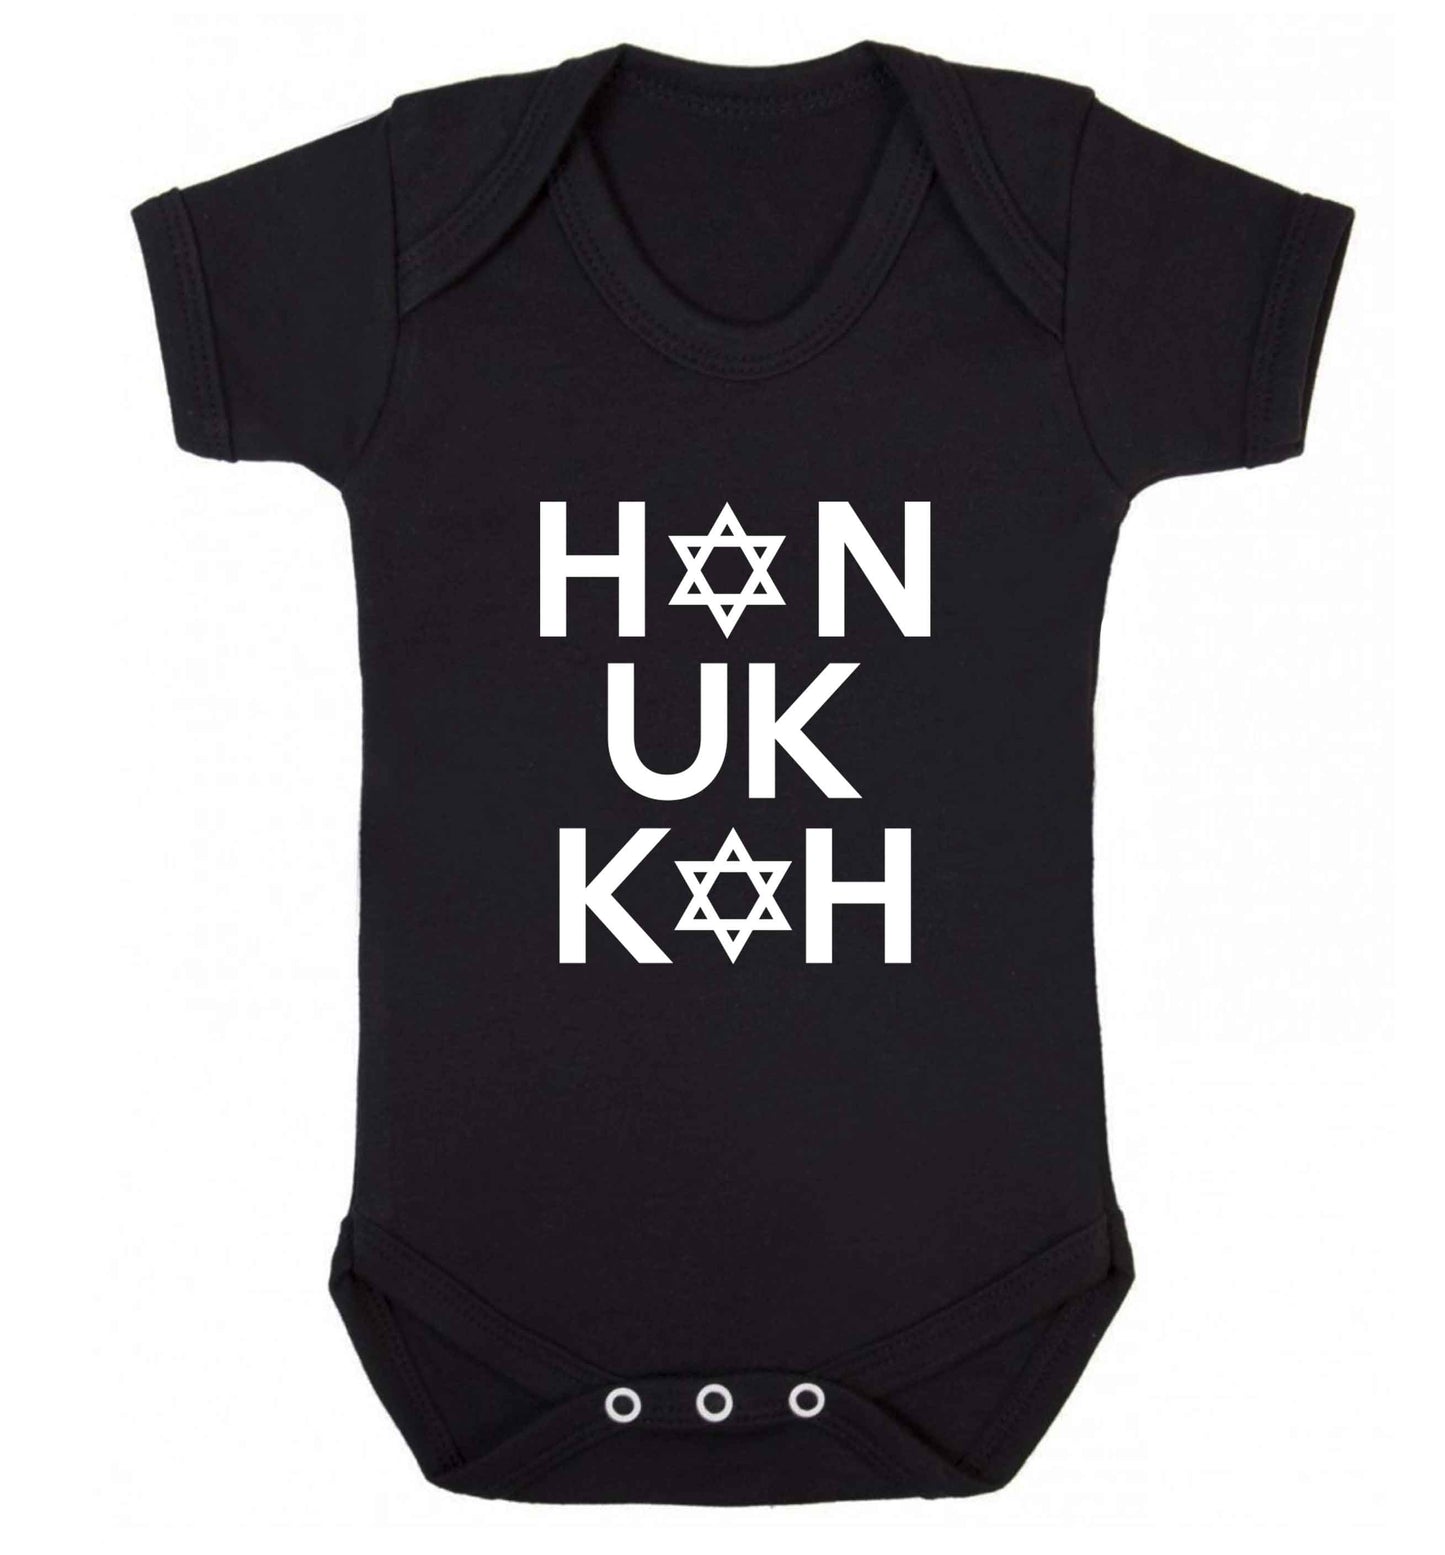 Han uk kah  Hanukkah star of david baby vest black 18-24 months